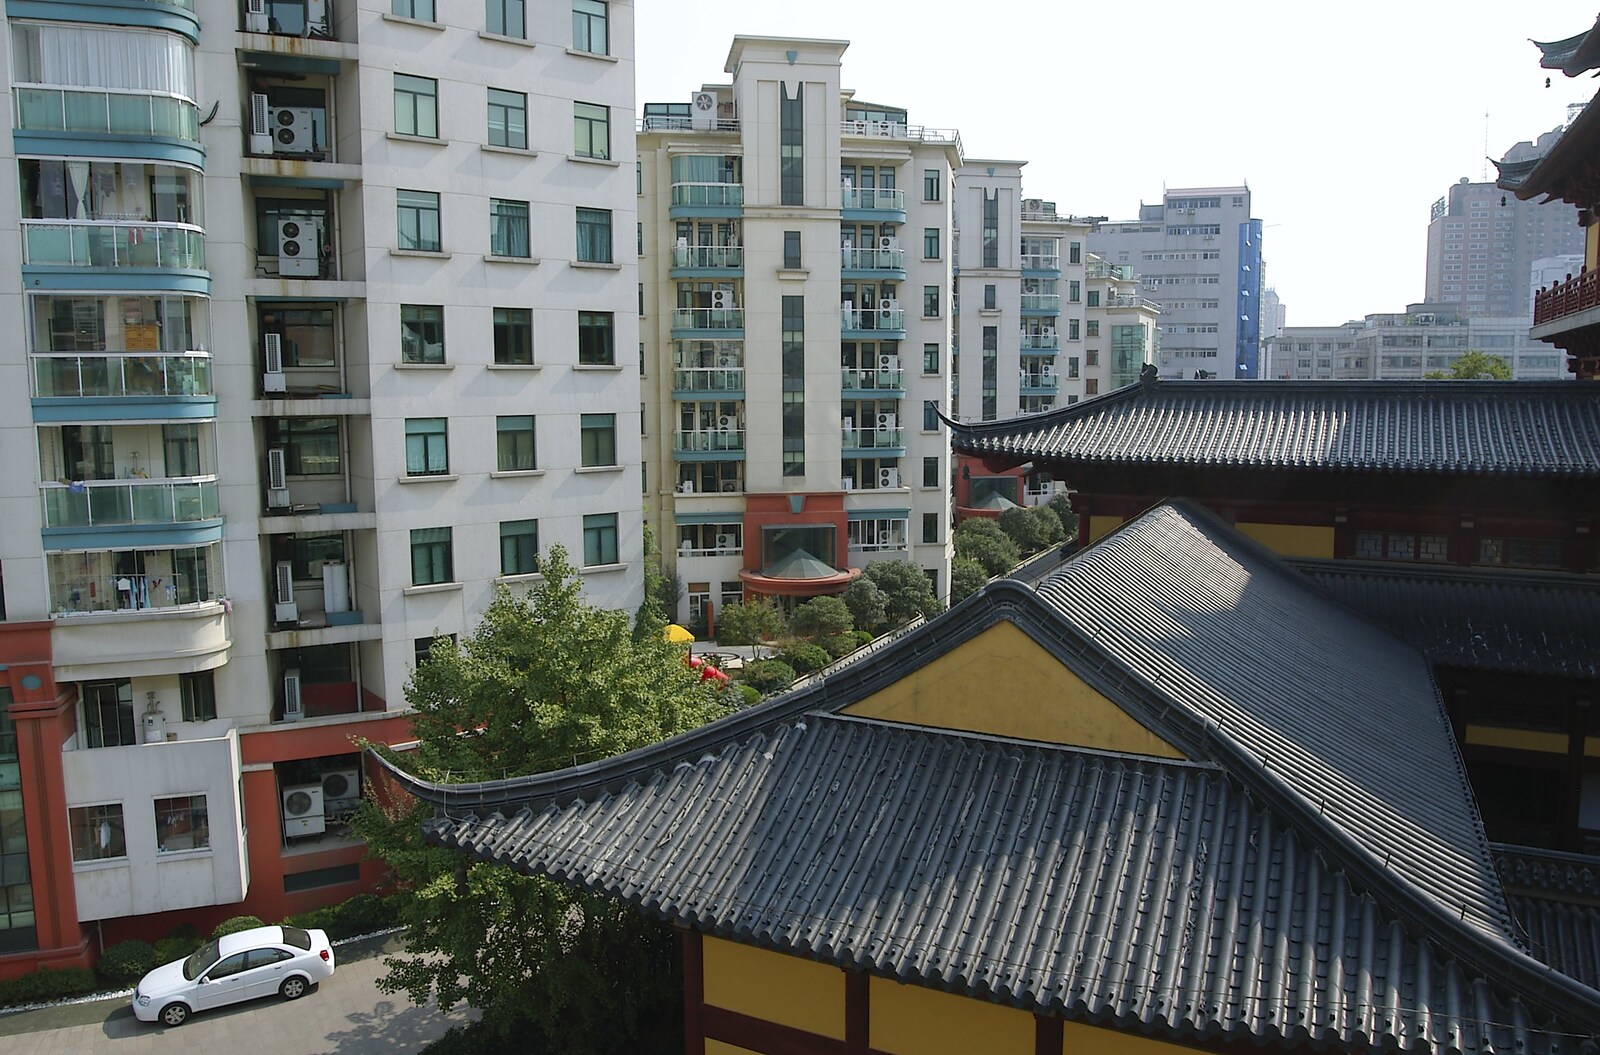 Apartment blocks from A Few Days in Nanjing, Jiangsu Province, China - 7th October 2006